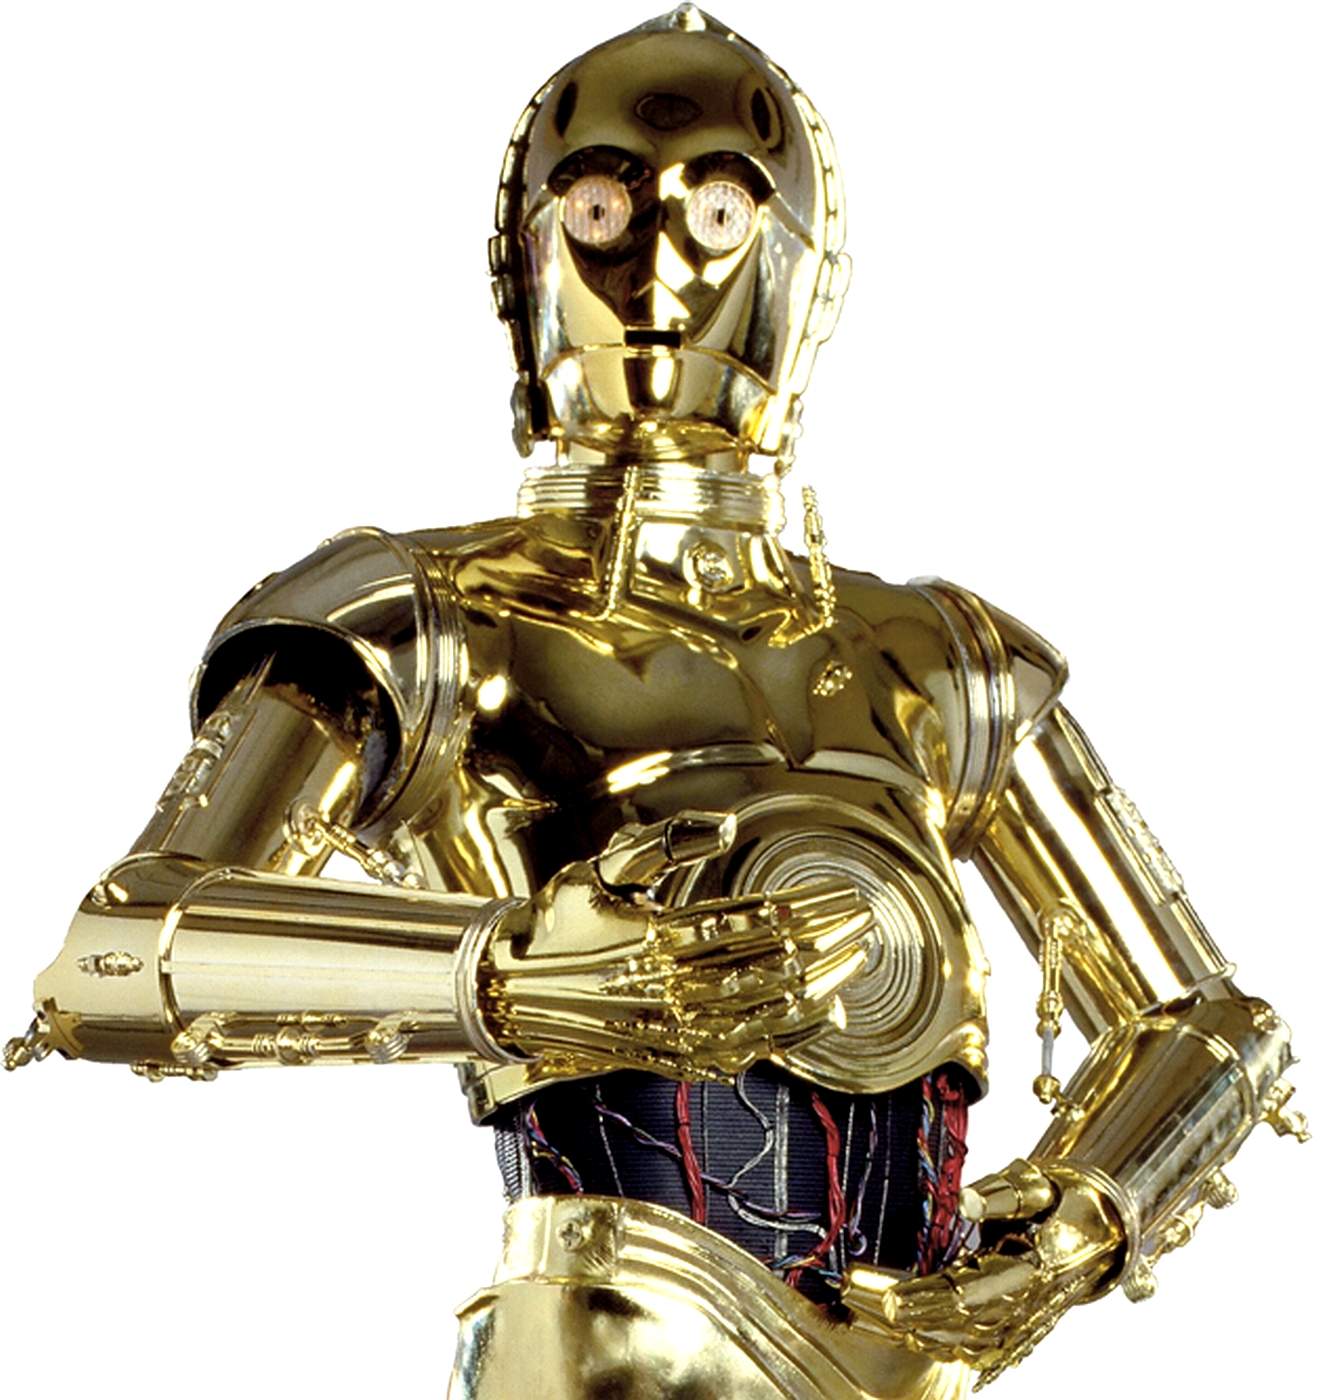 www.theoldrobots.com/images27/C-3PO-4.JPG